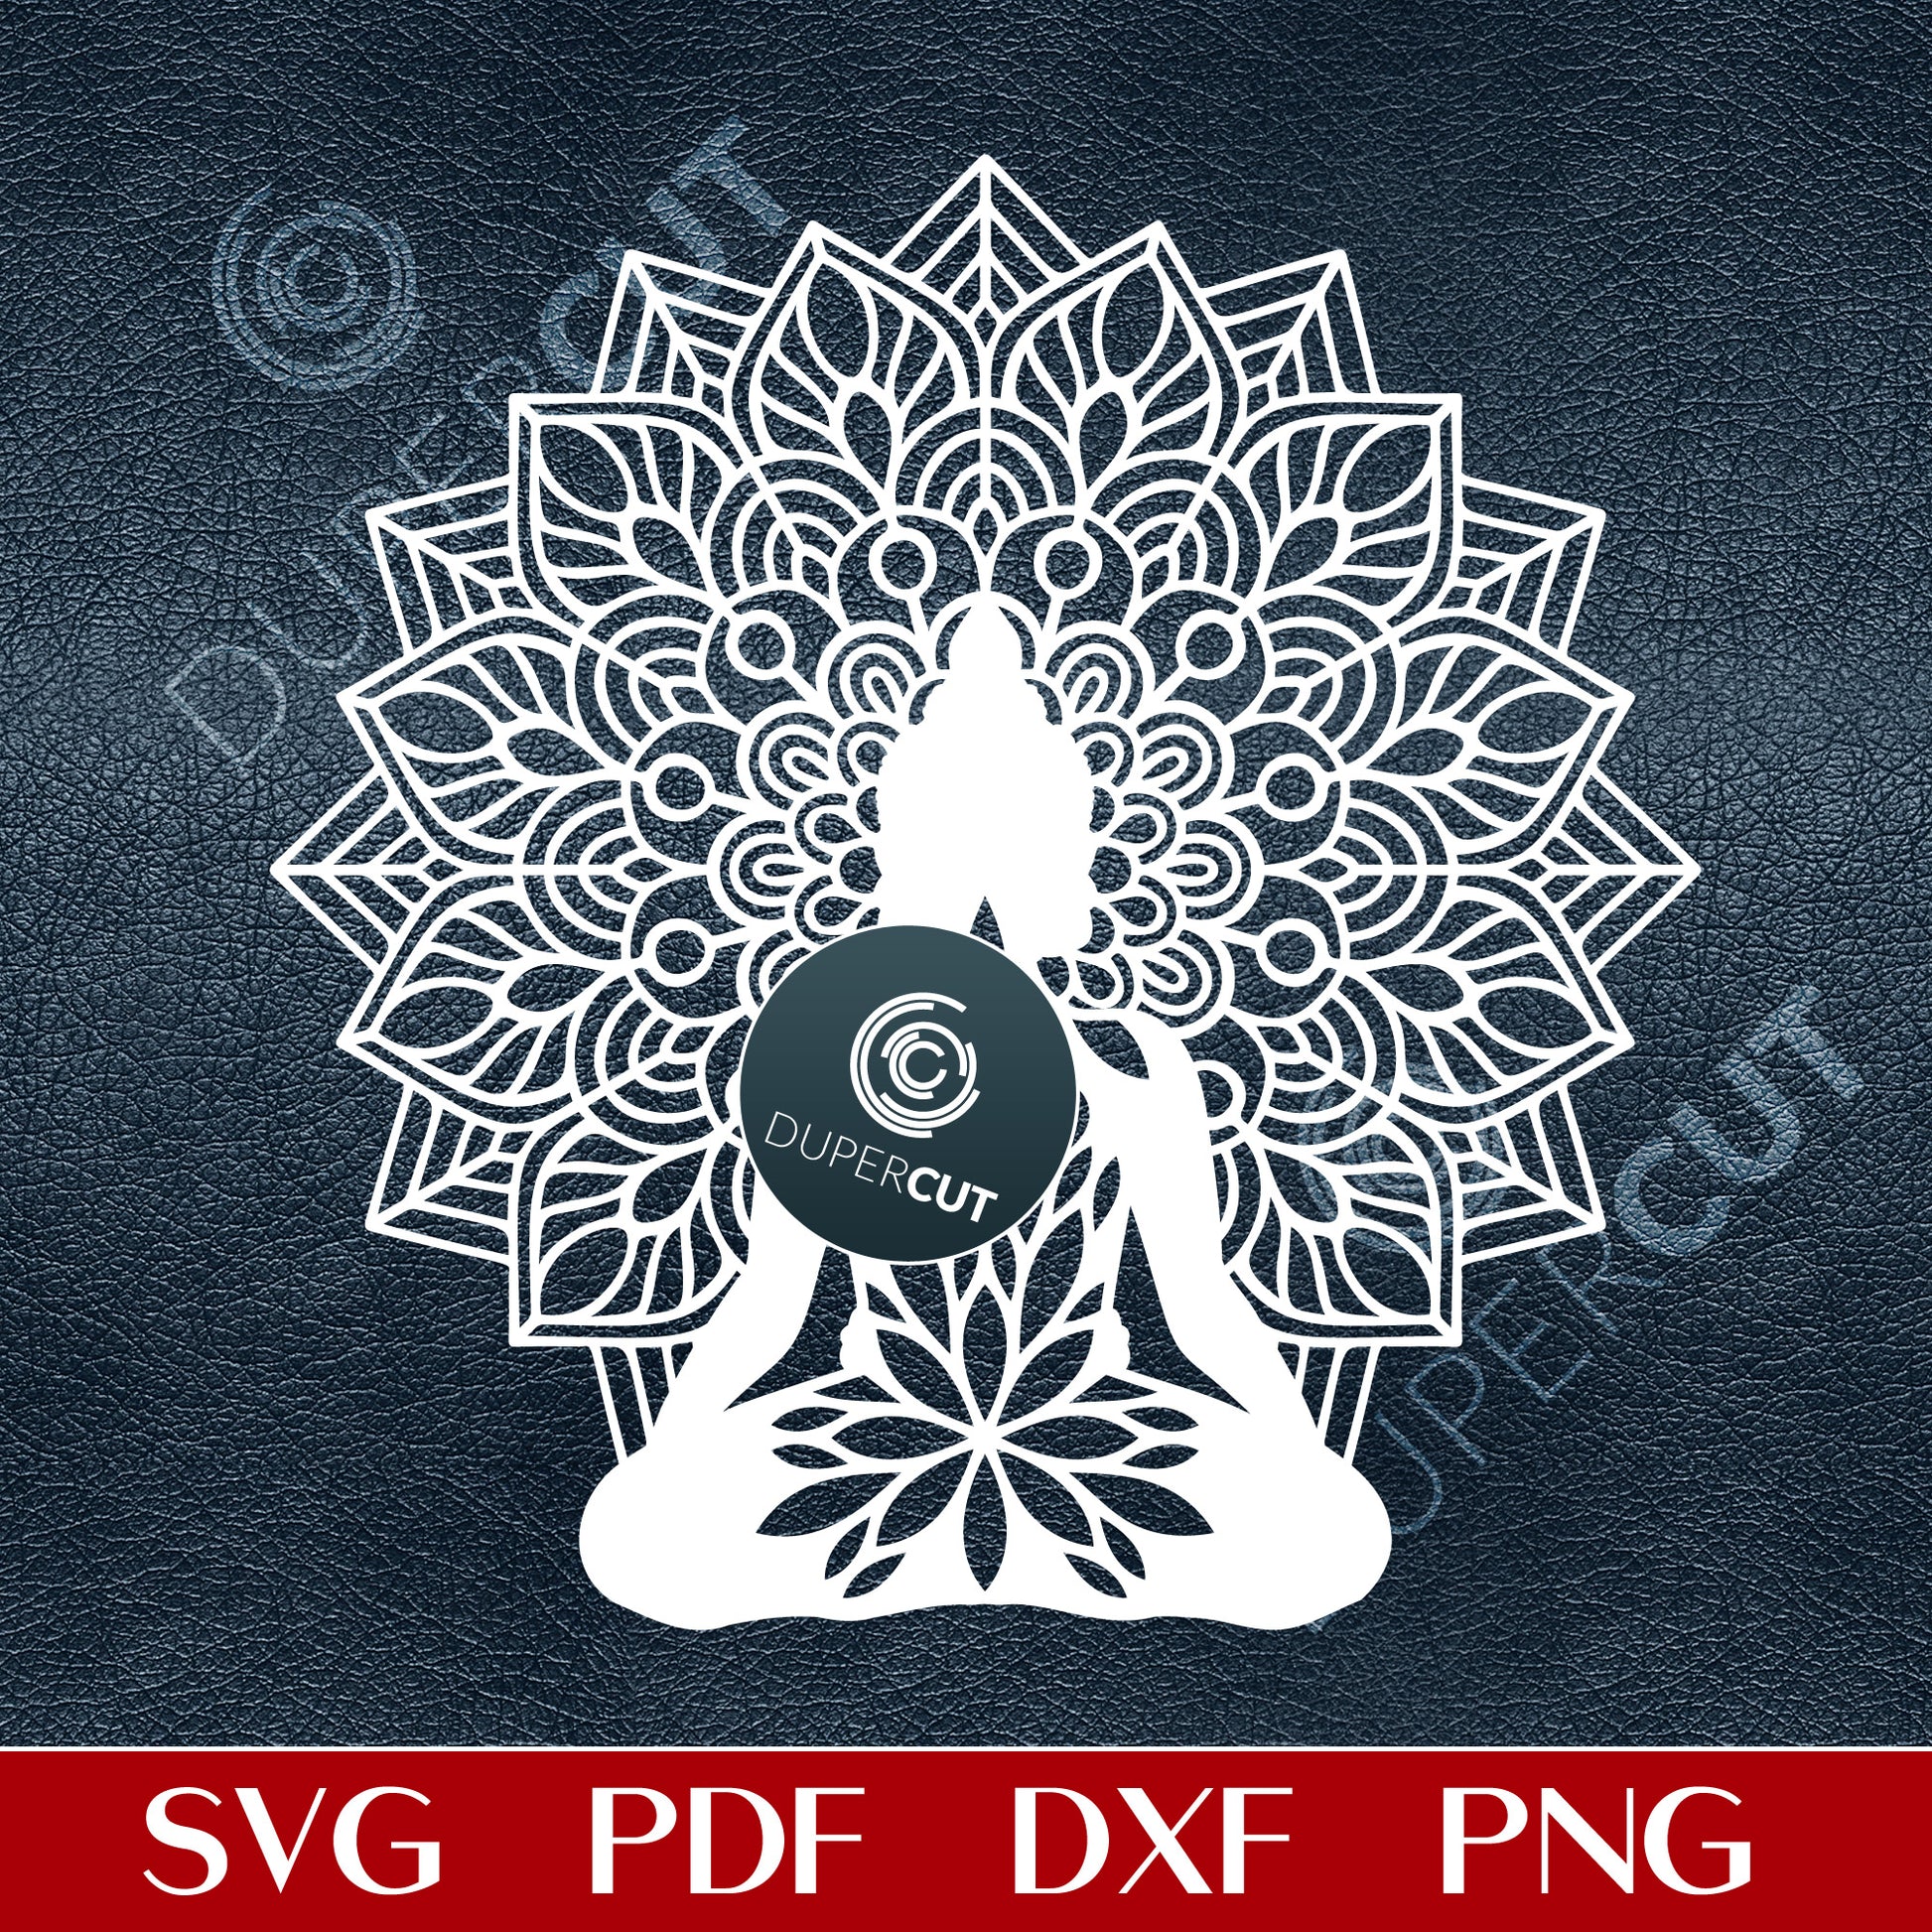 Mandala Buddha - paper and vinyl cutting template SVG, PDF, DXF vector files for Glowforge, Cricut, Silhouette Cameo, CNC Plasma machines